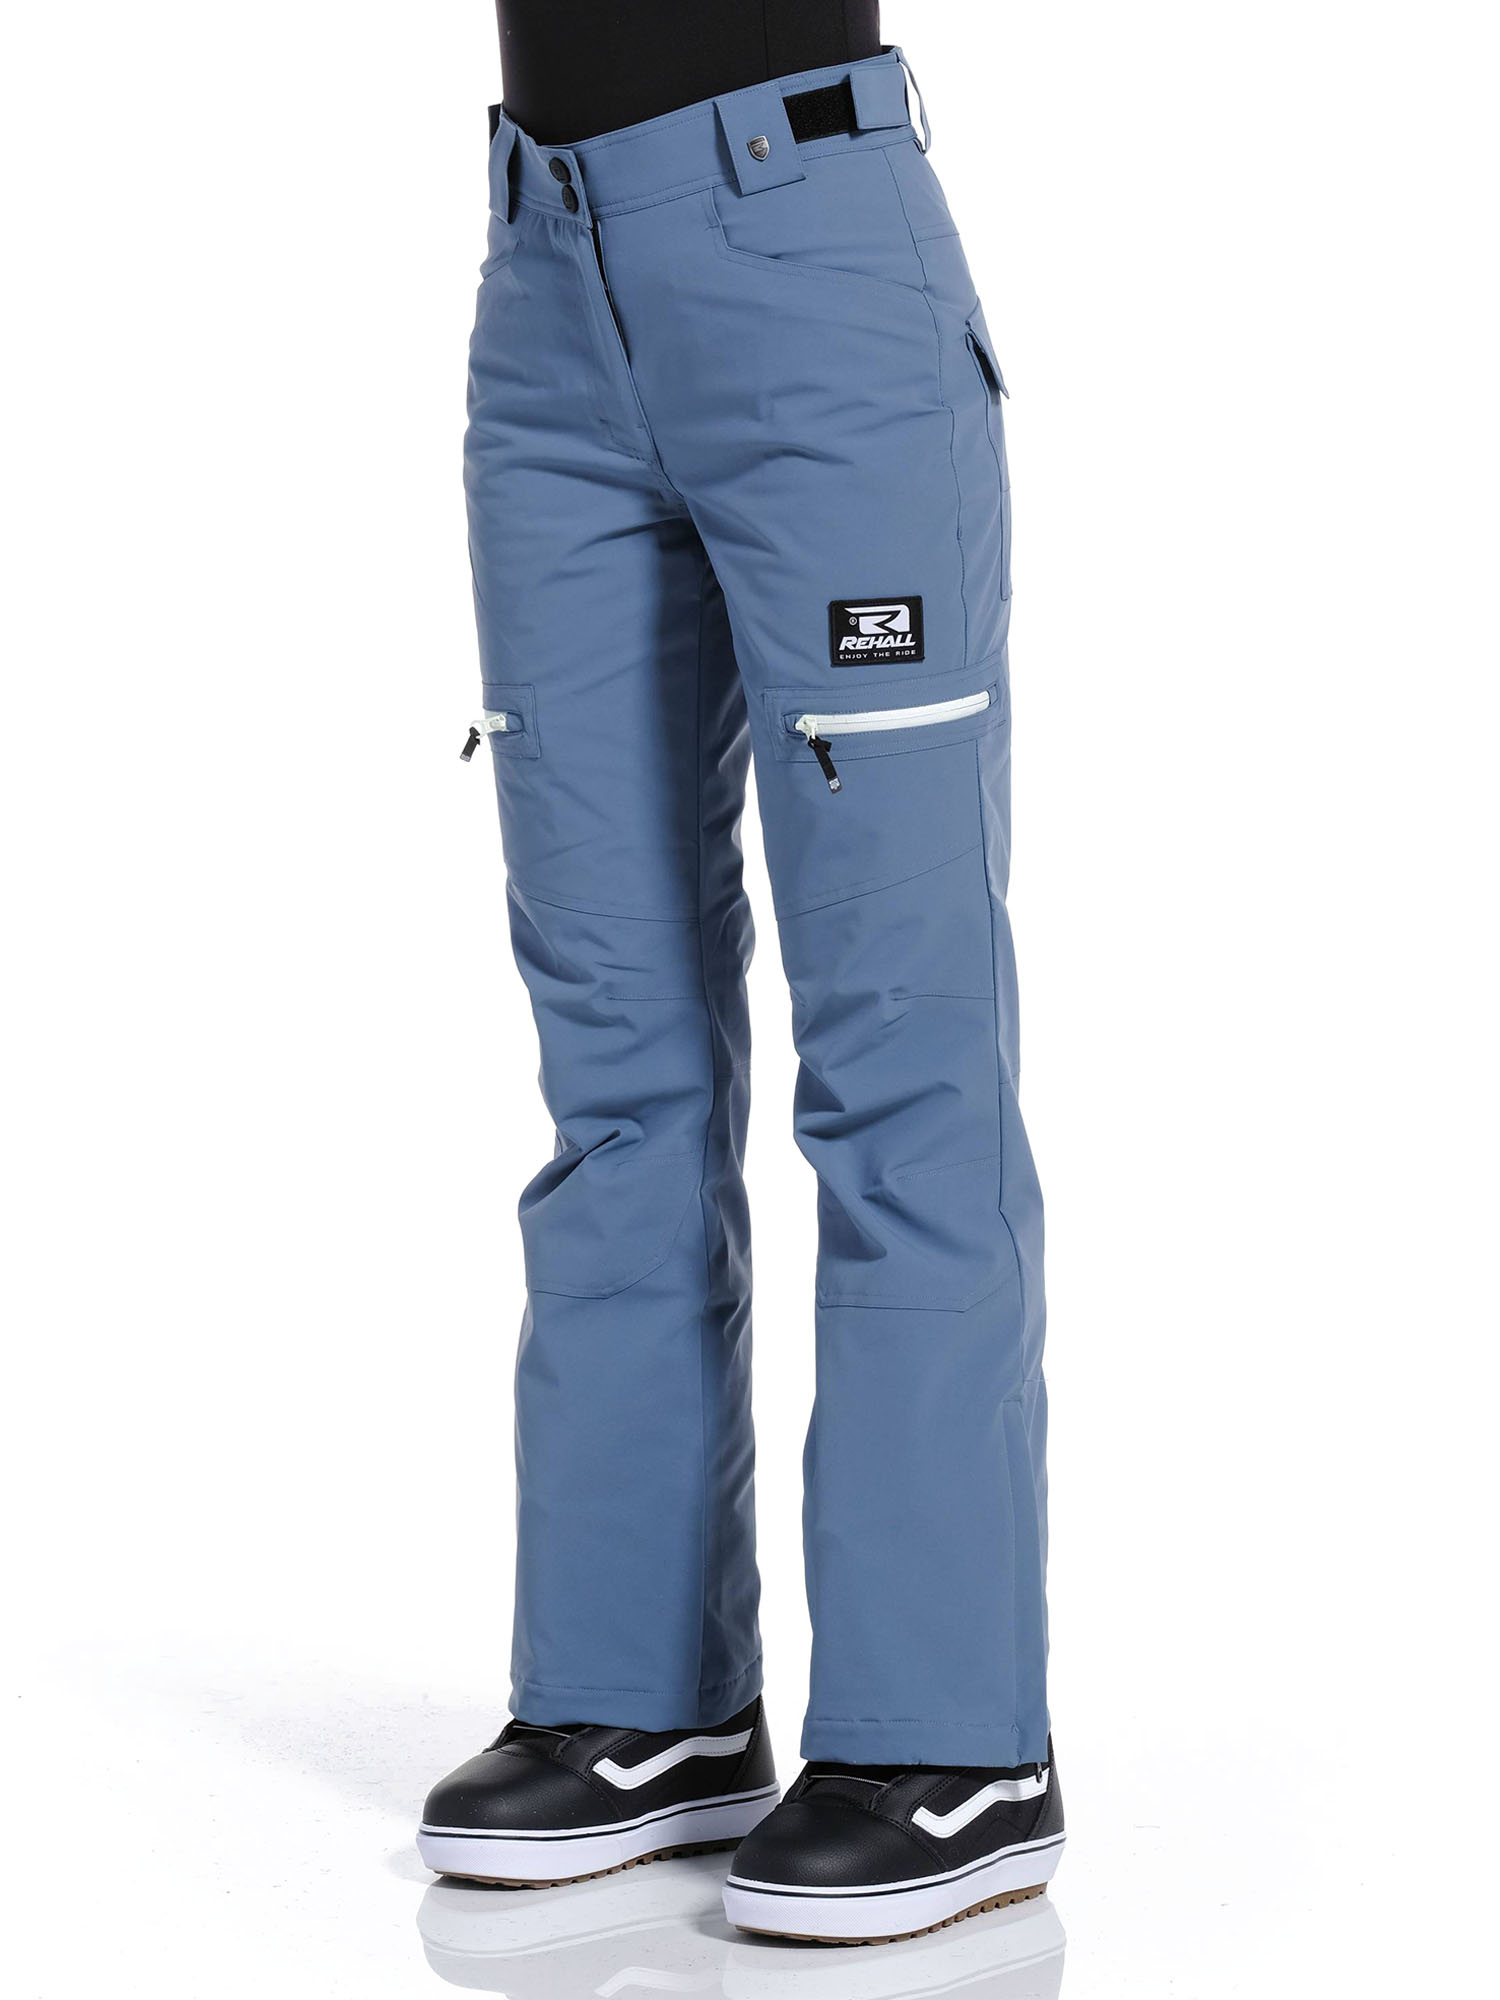 Спортивные брюки REHALL Nori-r china blue XS INT